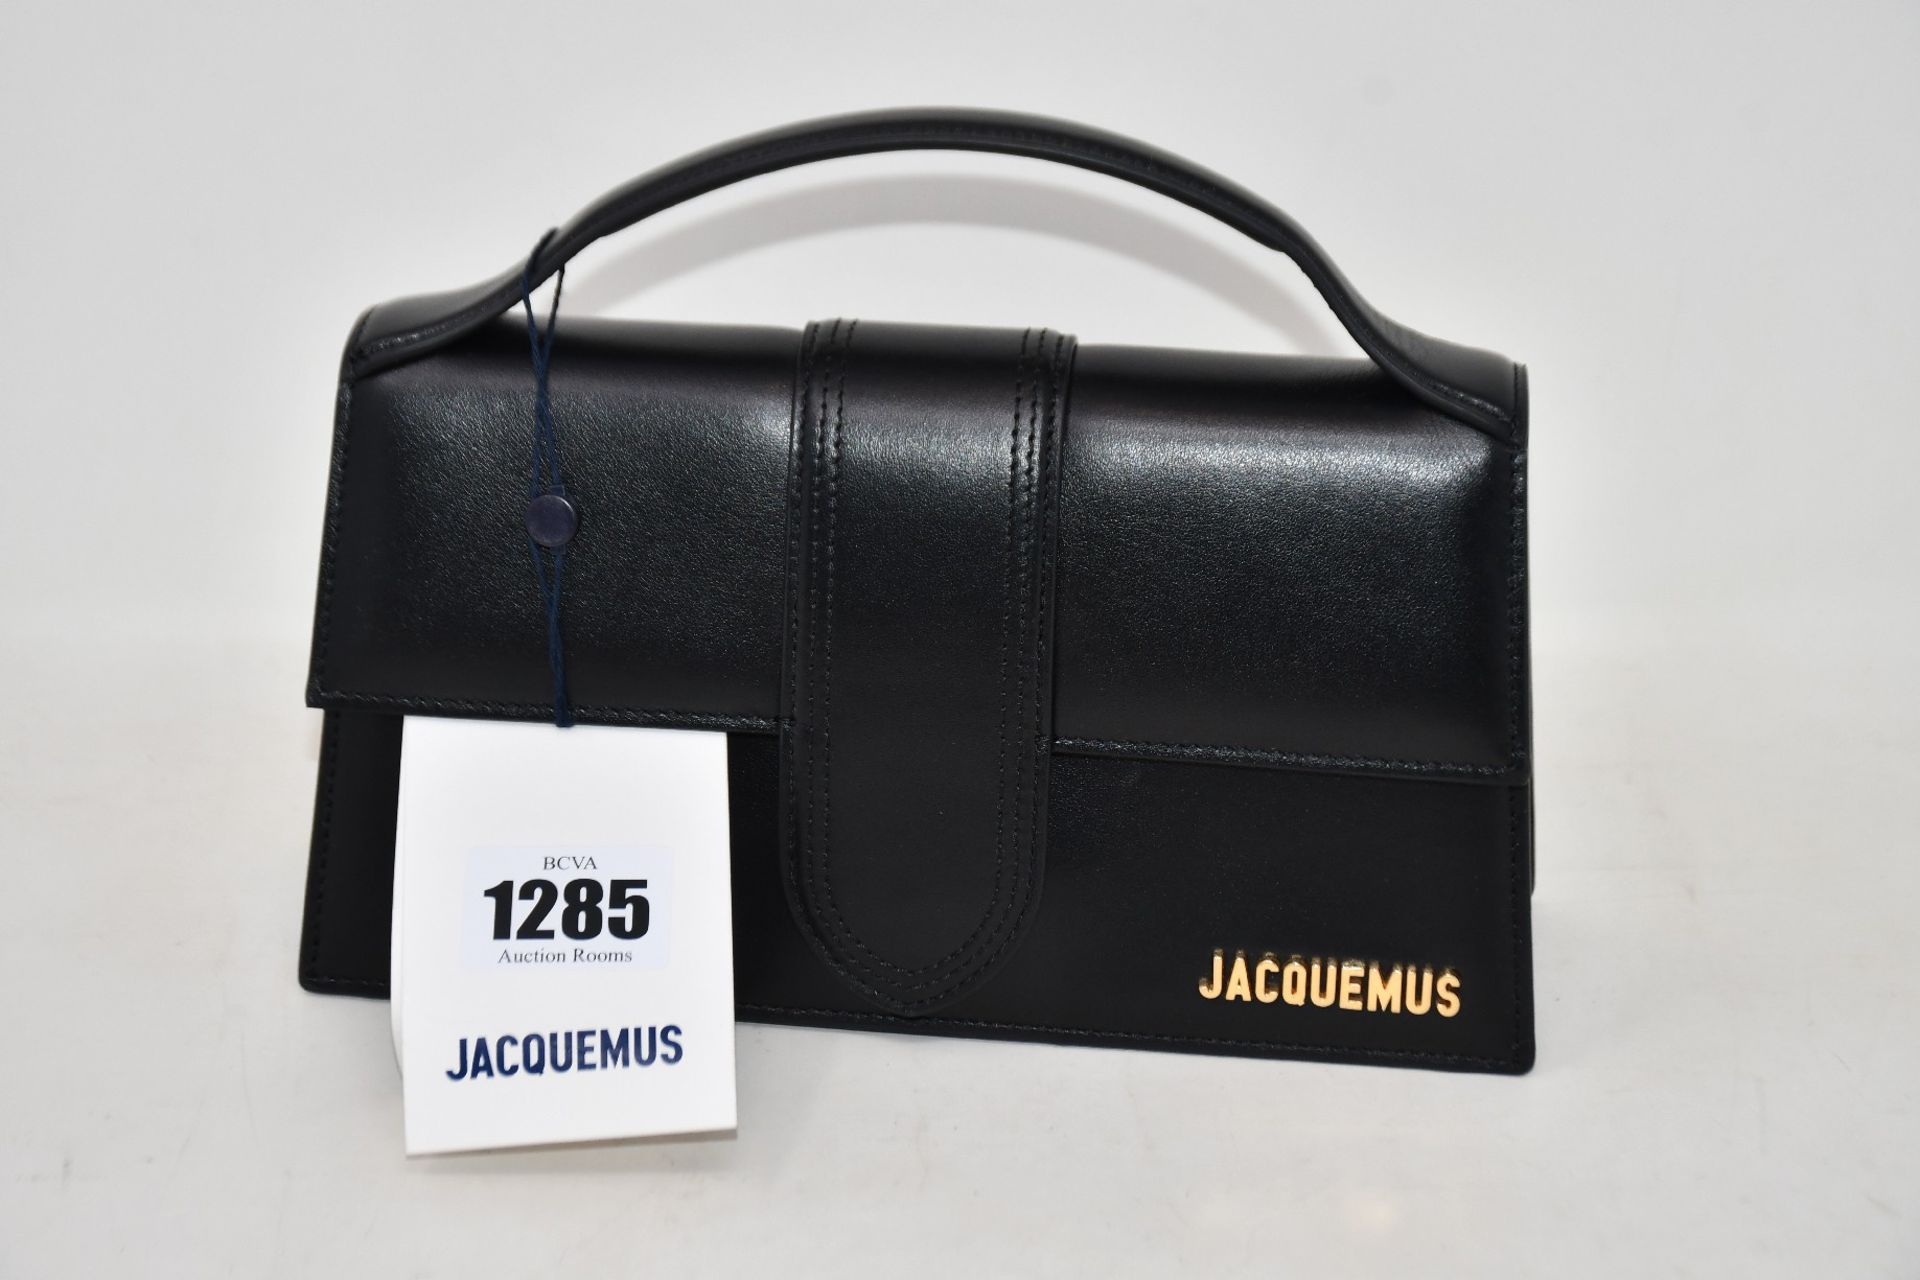 An as new Jacquemus bag.